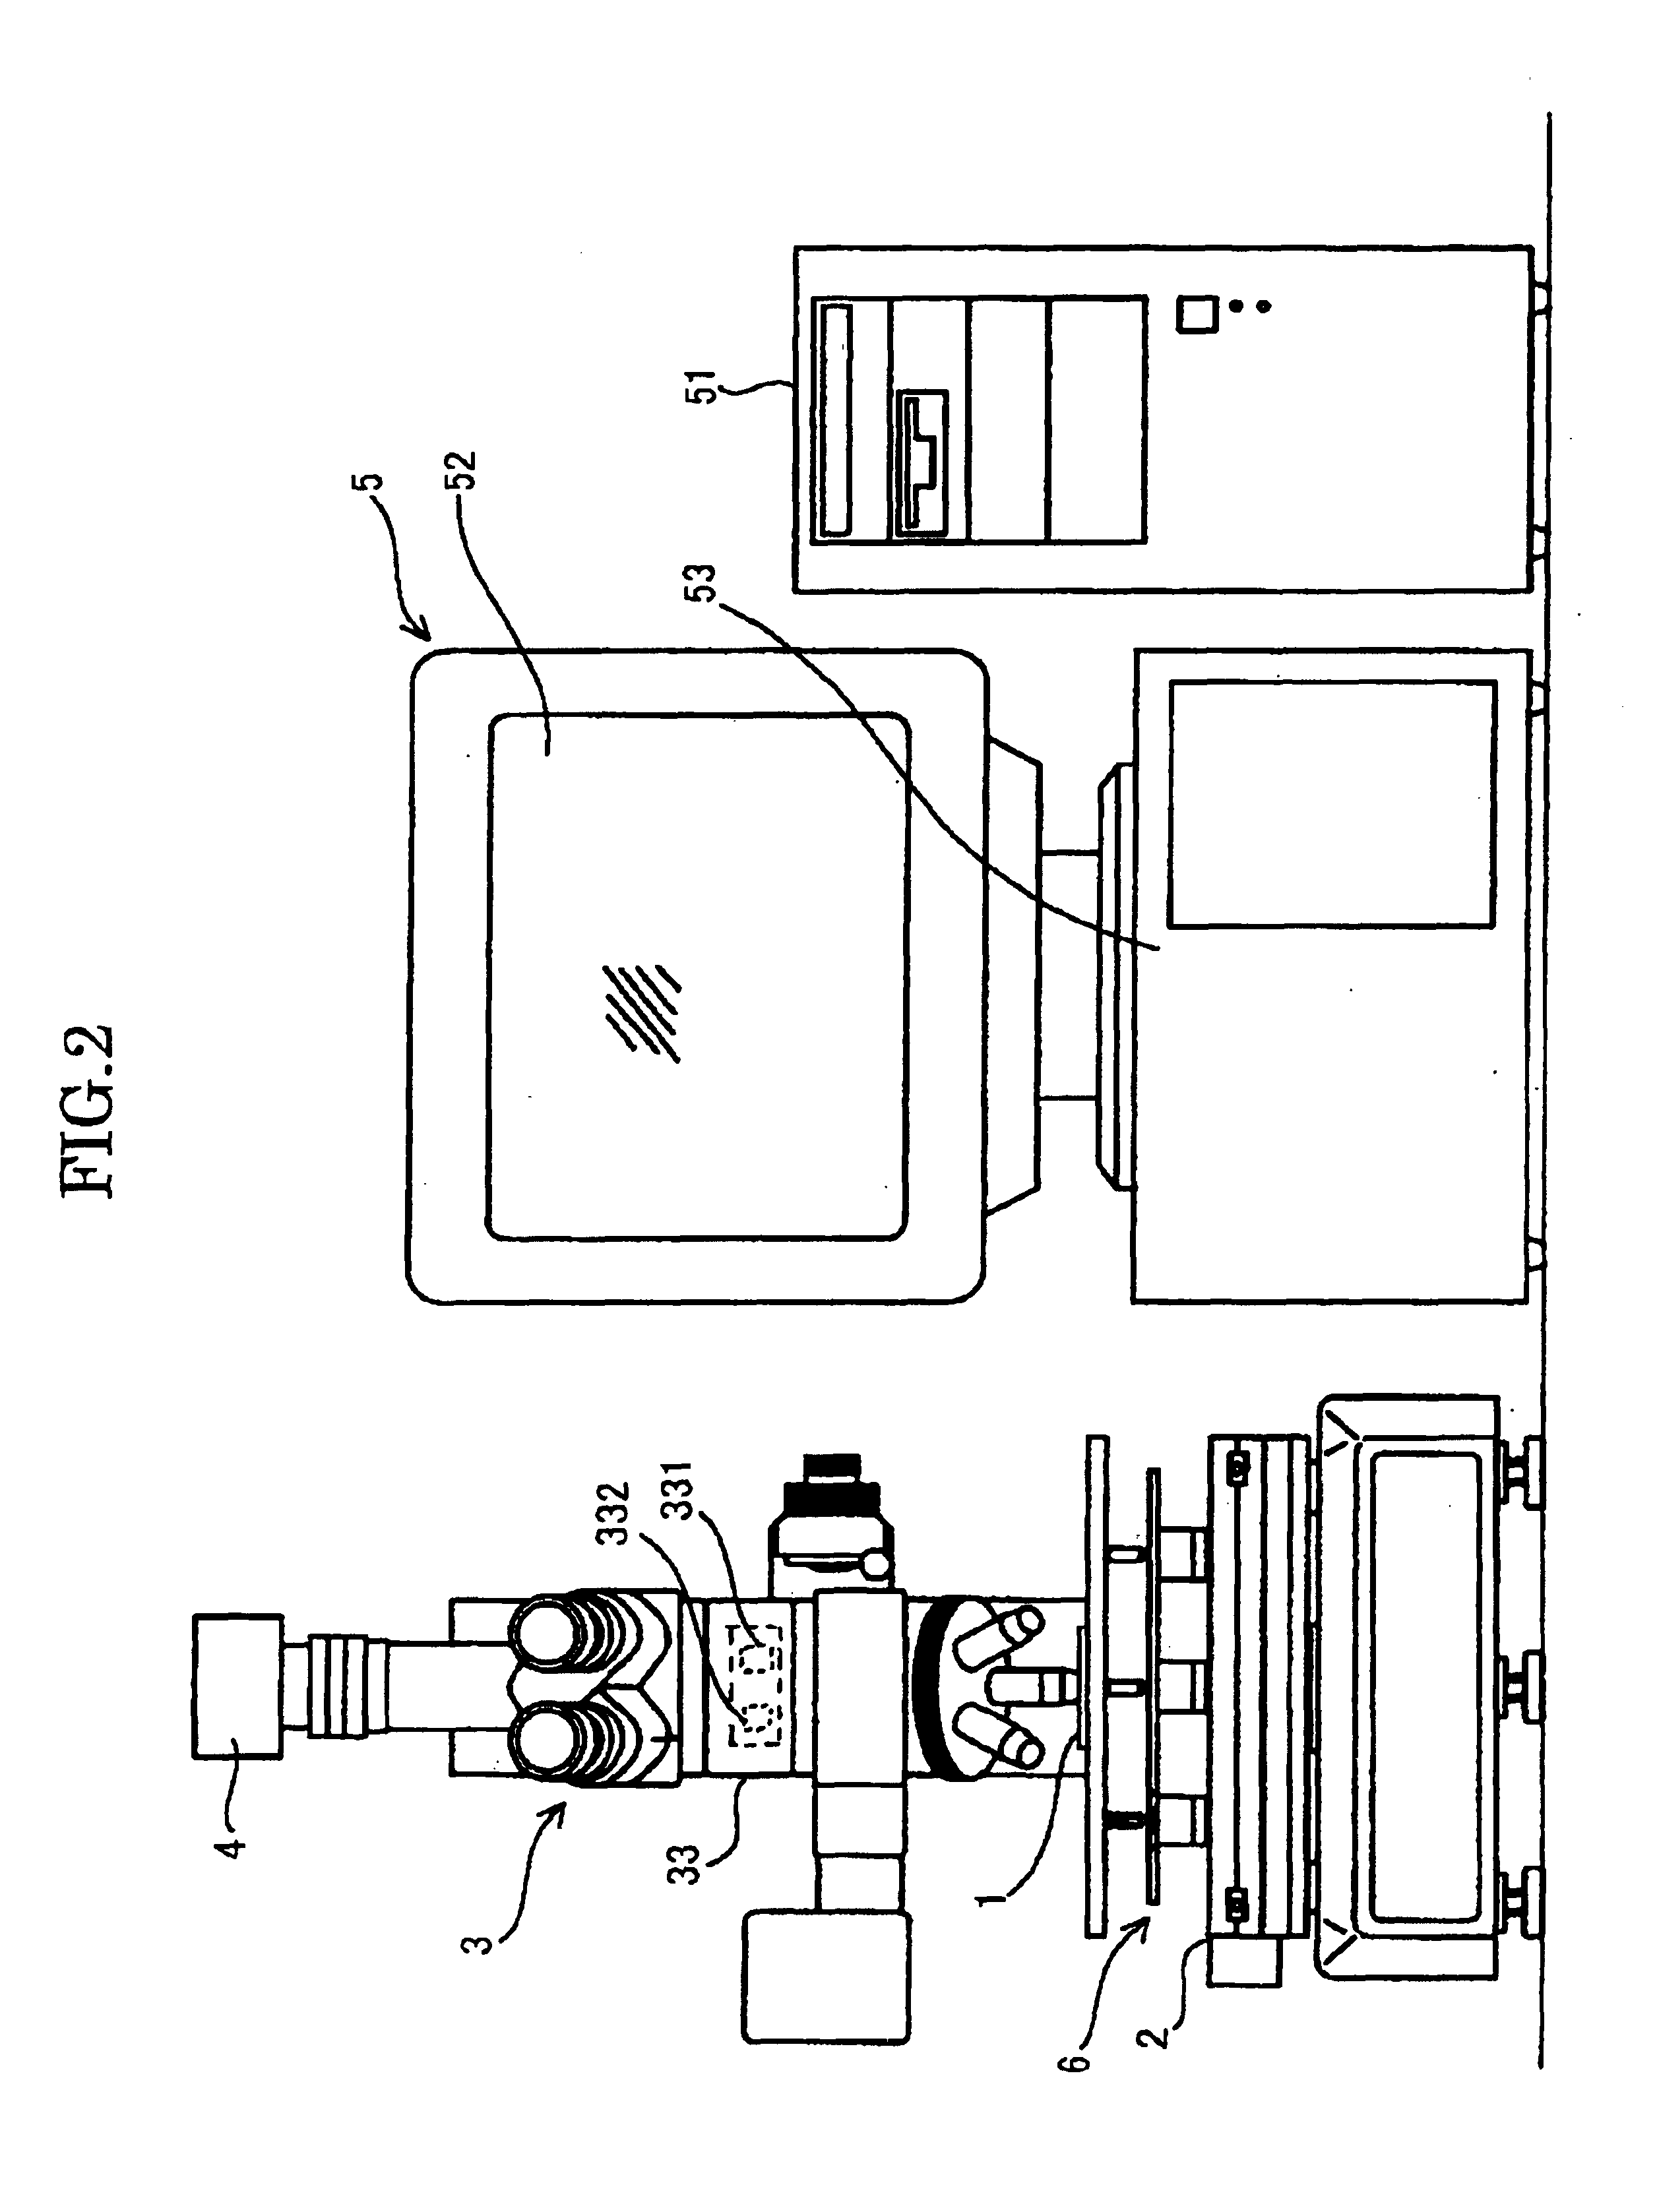 Microscope apparatus